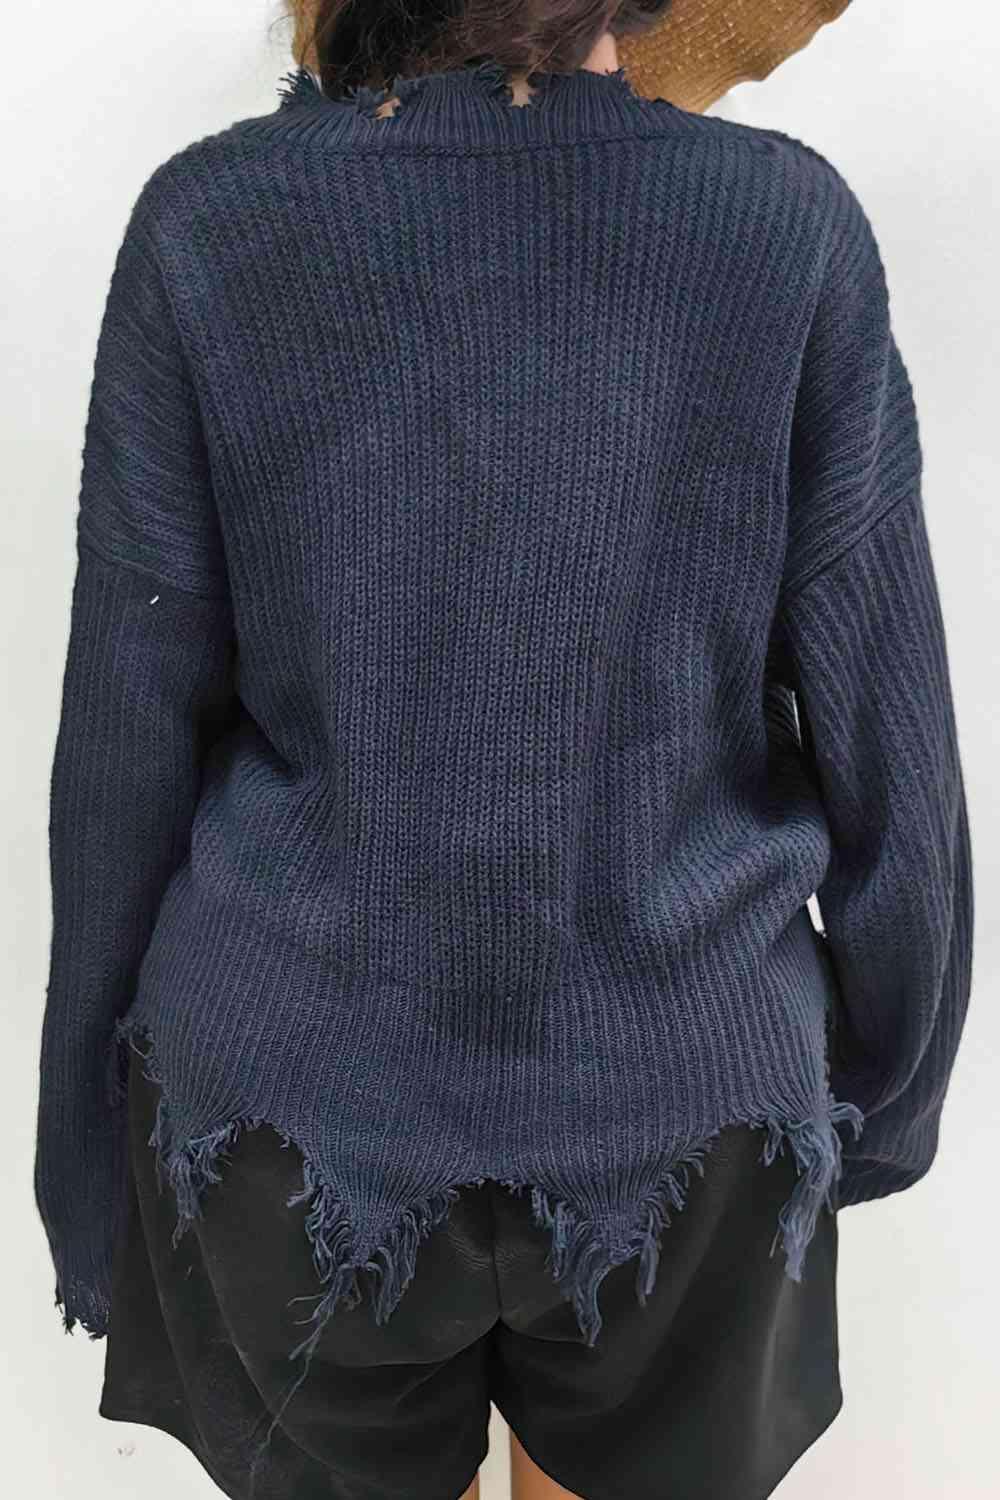 Fringe Trim Plus Size Navy Blue Sweater - MXSTUDIO.COM